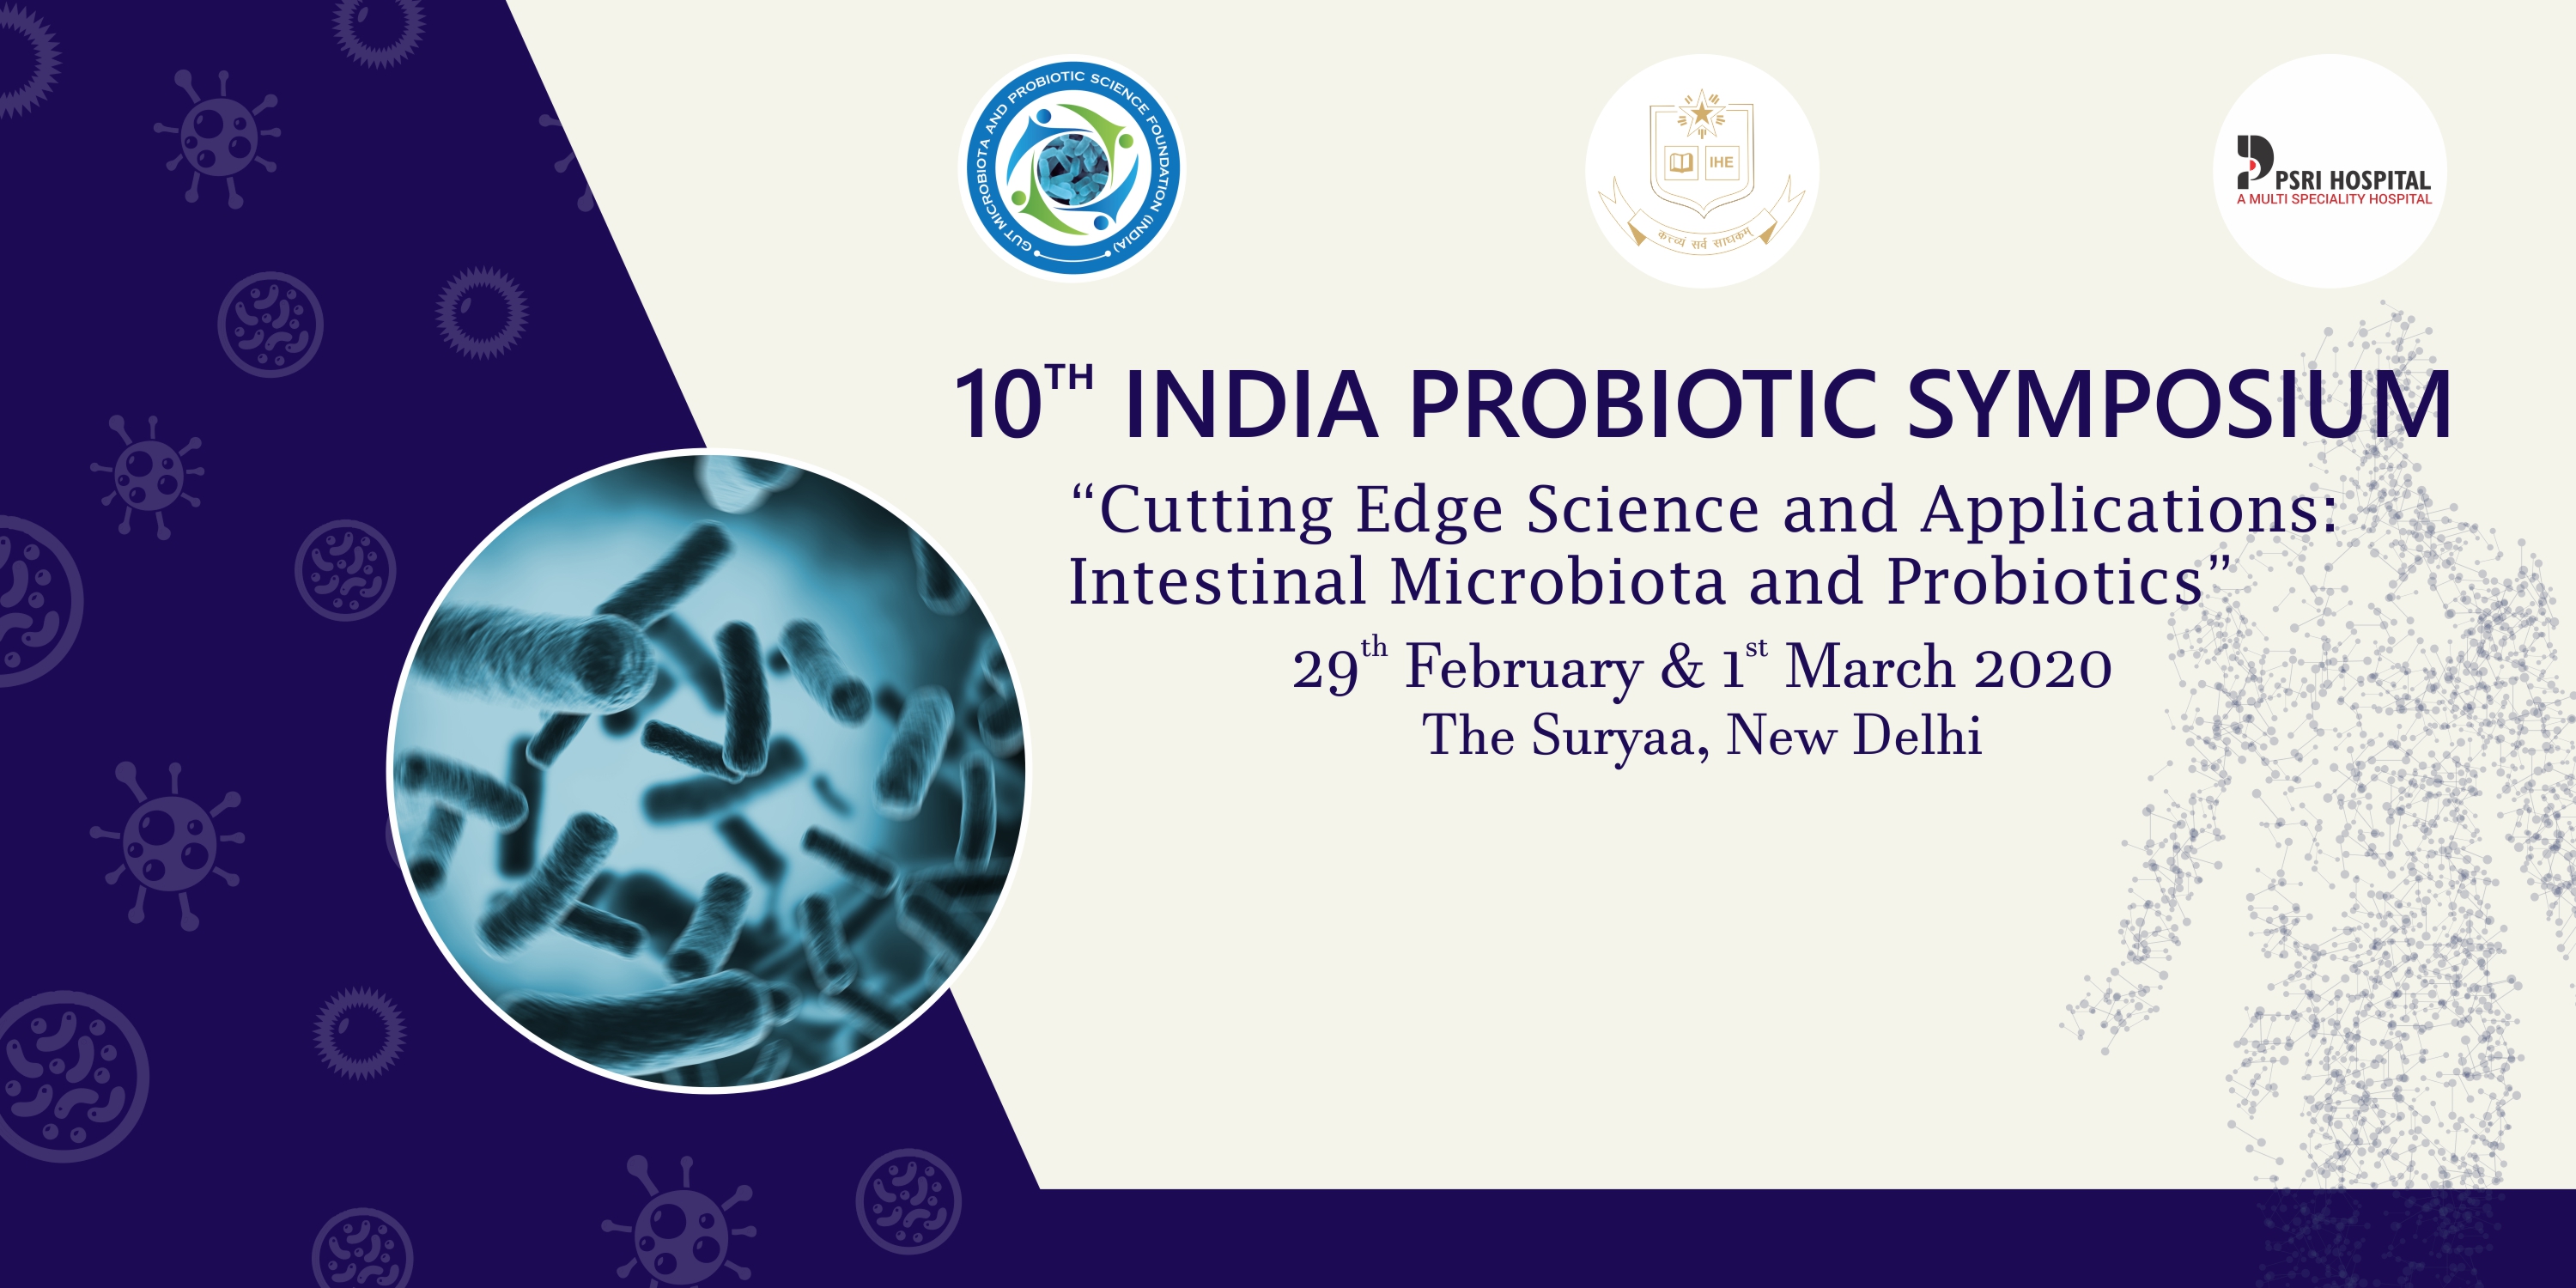 Gut Microbiota and Probiotics Events